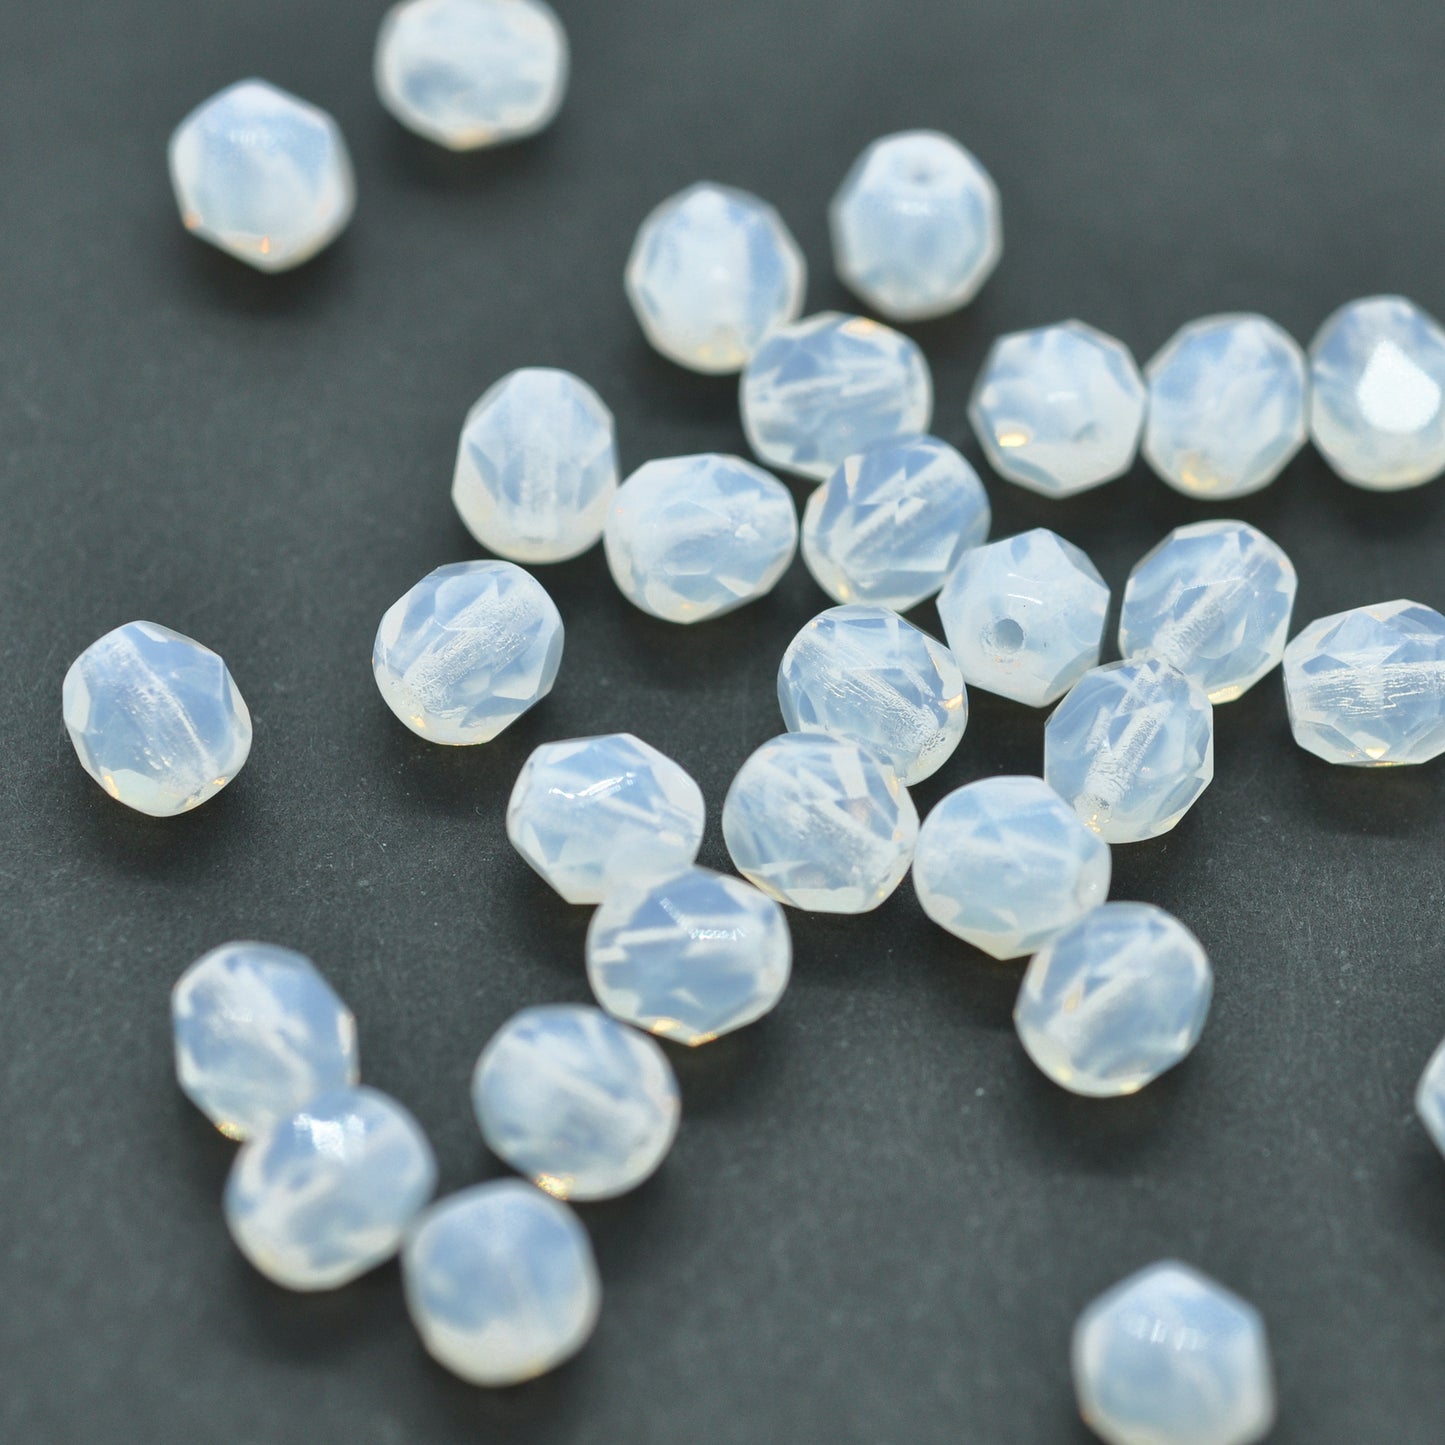 Preciosa faceted glass beads / white opal / 50 pcs. / 6mm